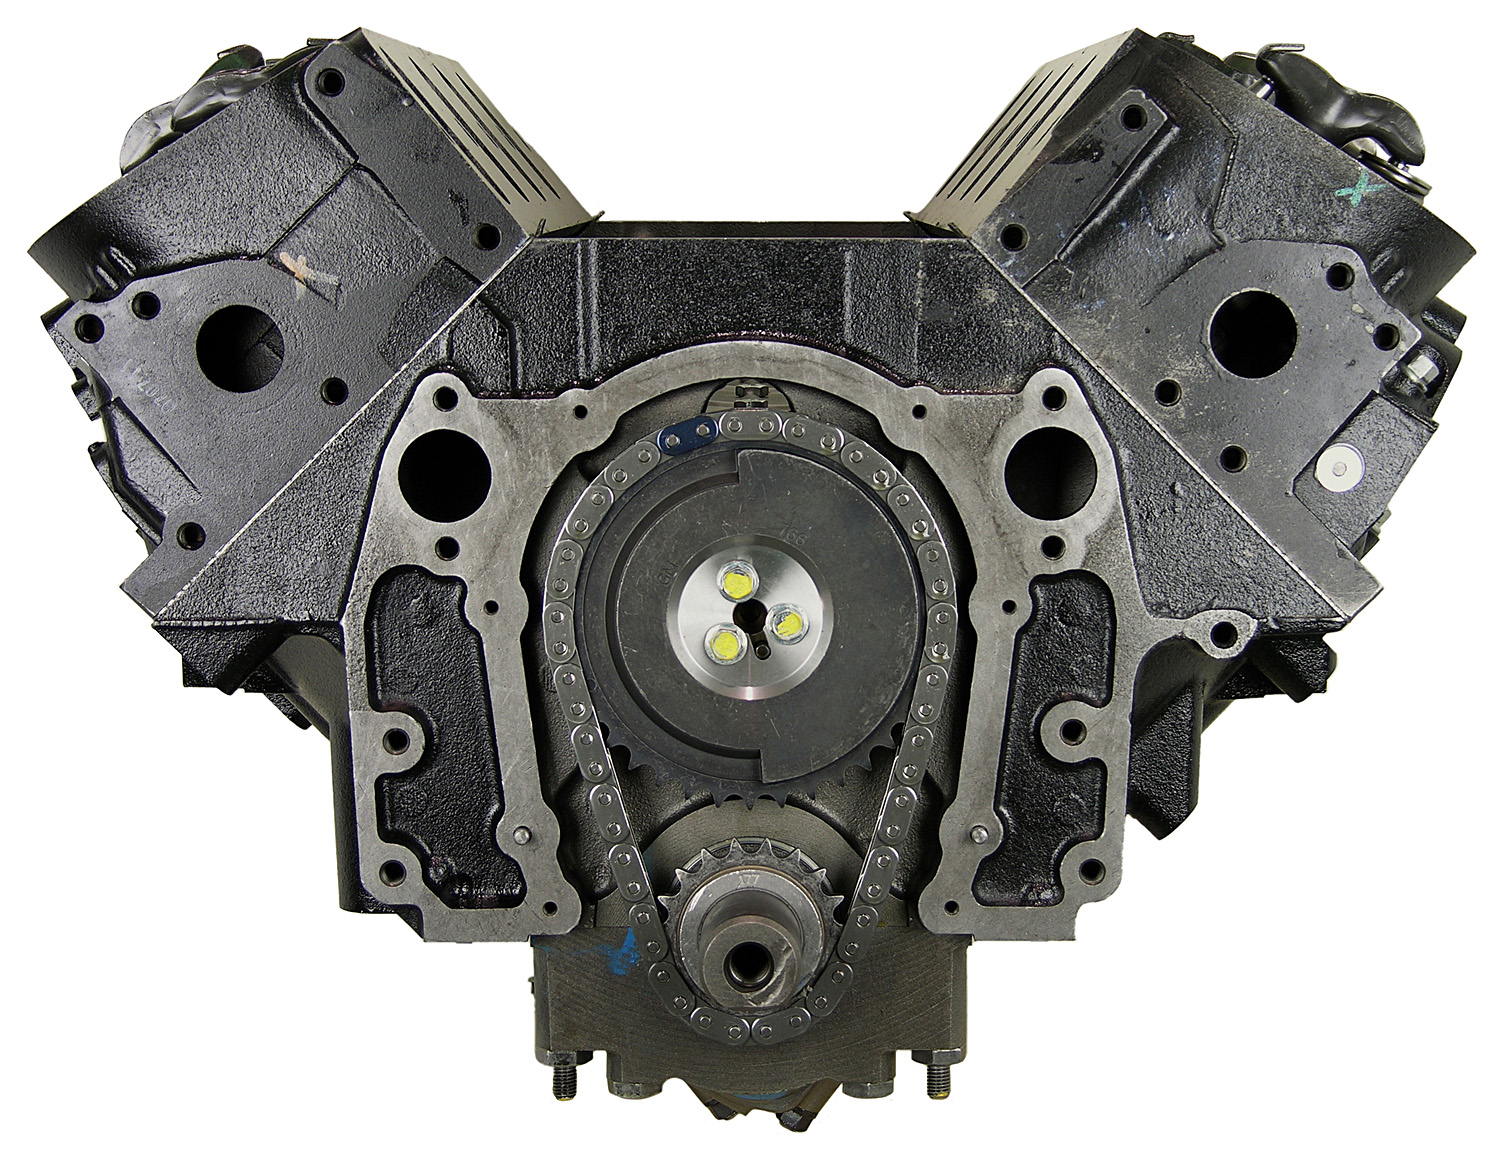 Chevy 496 8.1L V8 Remanufactured Engine - 2004-2009